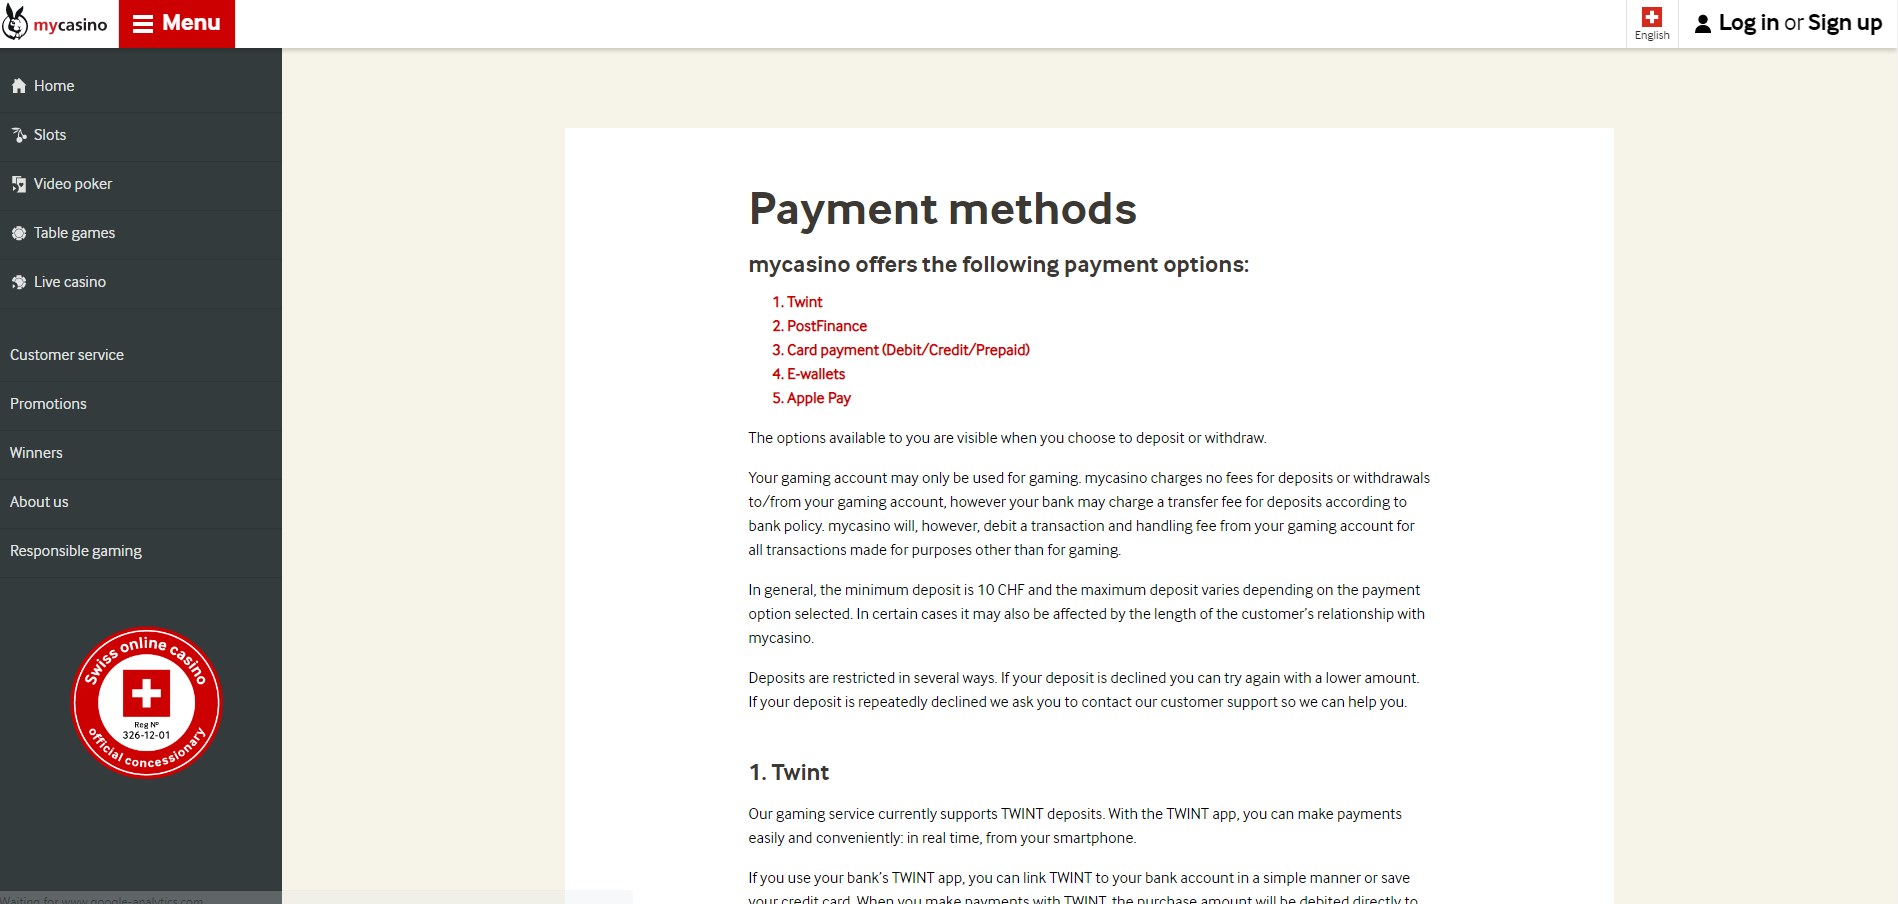 mycasino Payment Methods